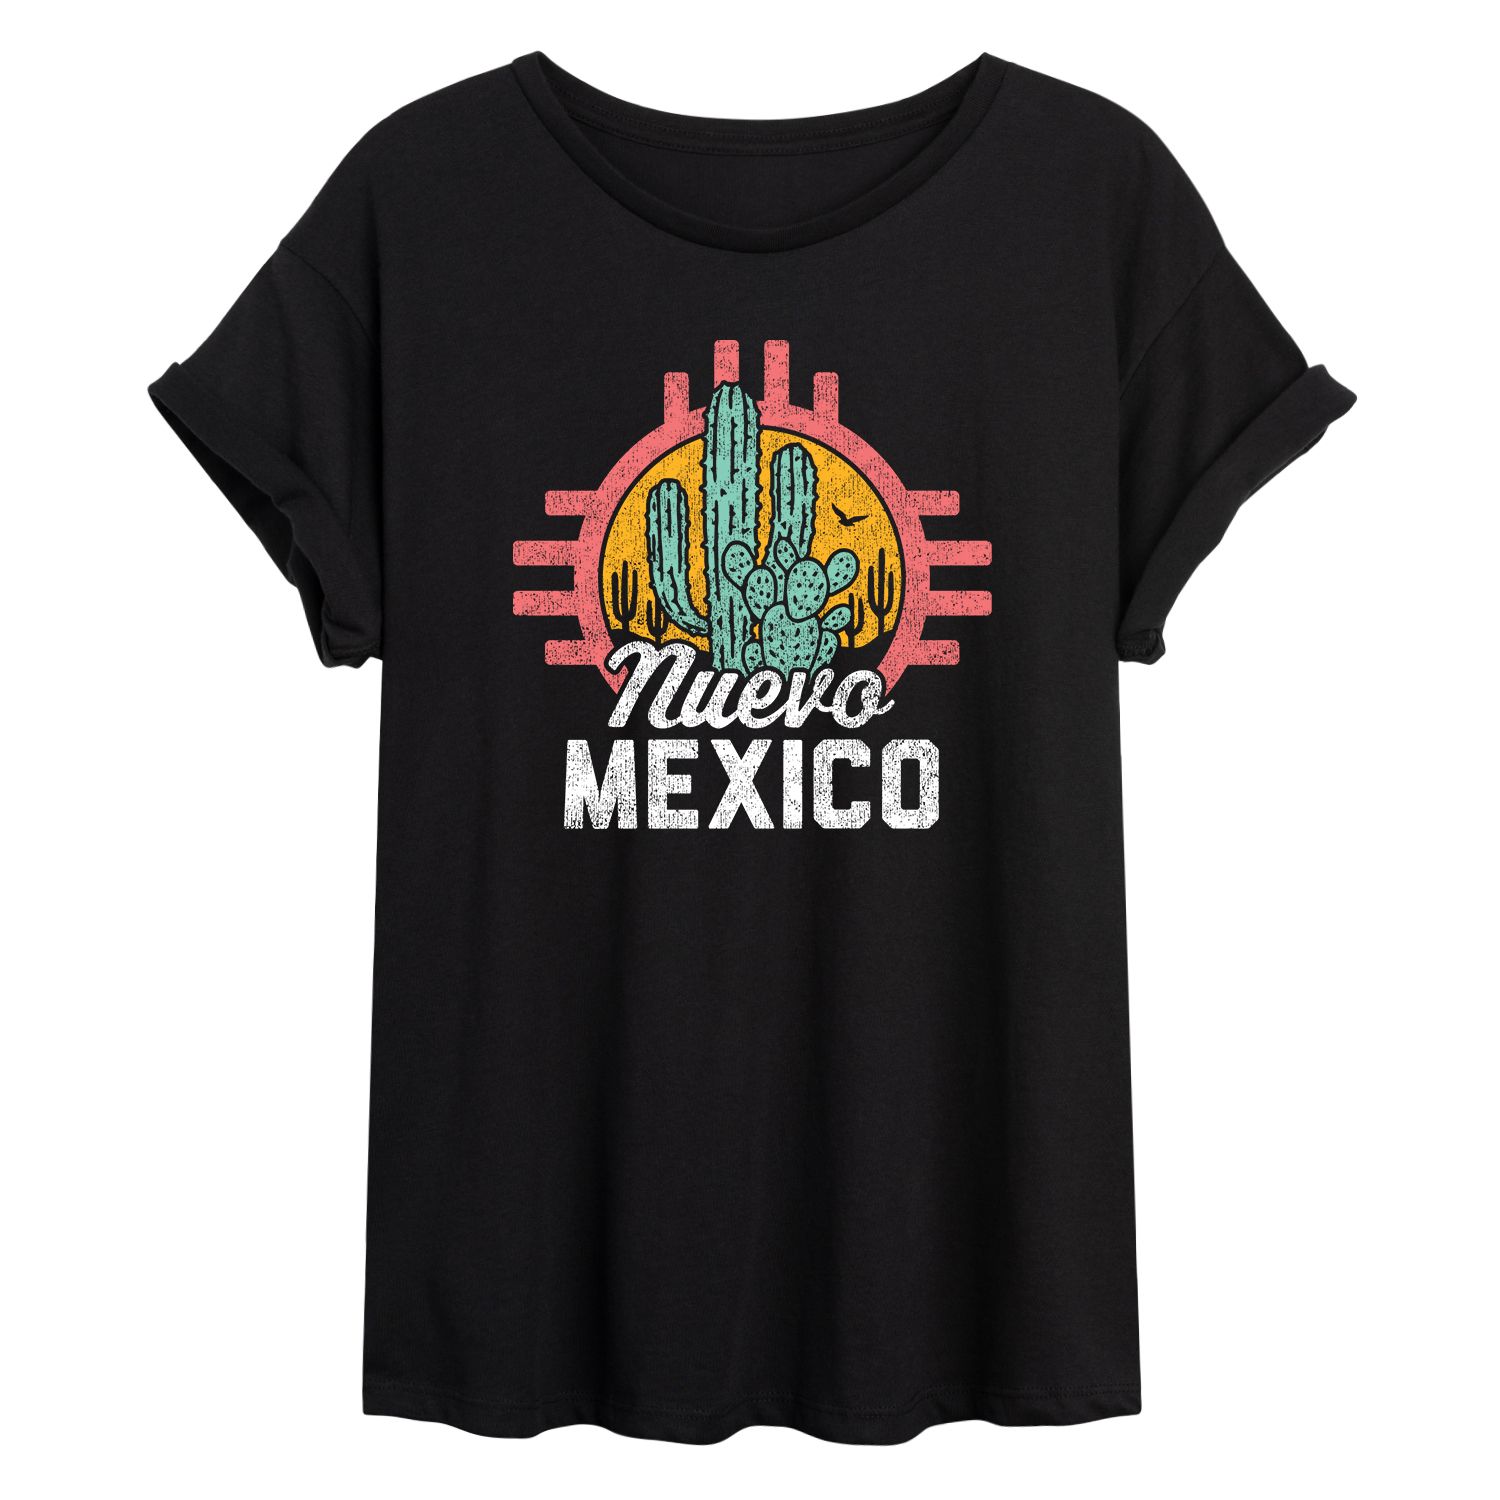 Размерная футболка с рисунком Nuevo Mexico для юниоров Licensed Character